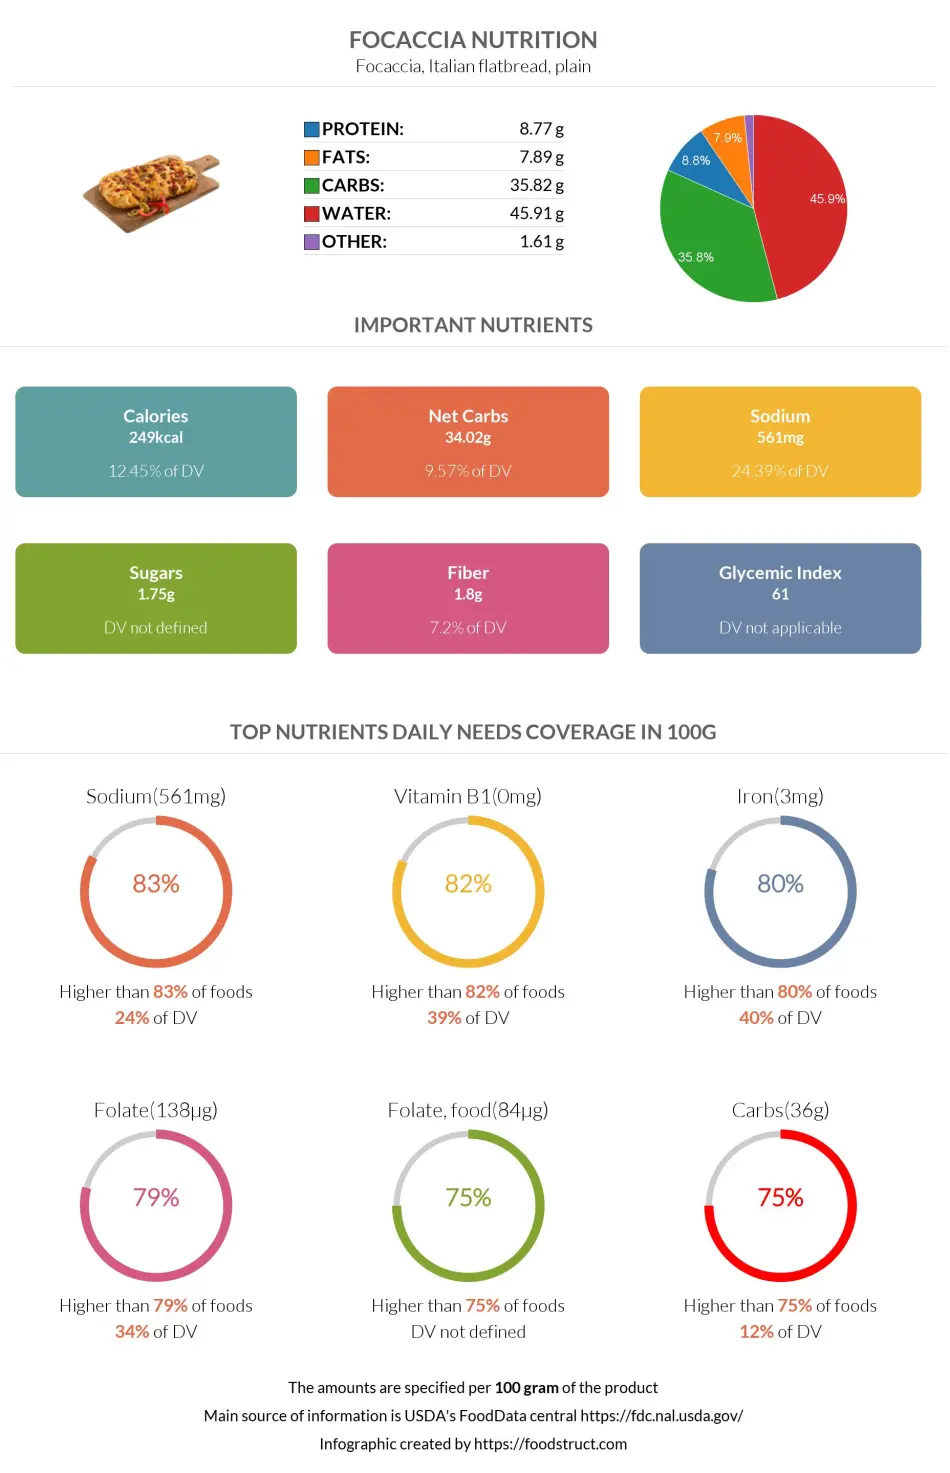 Focaccia nutrition infographic